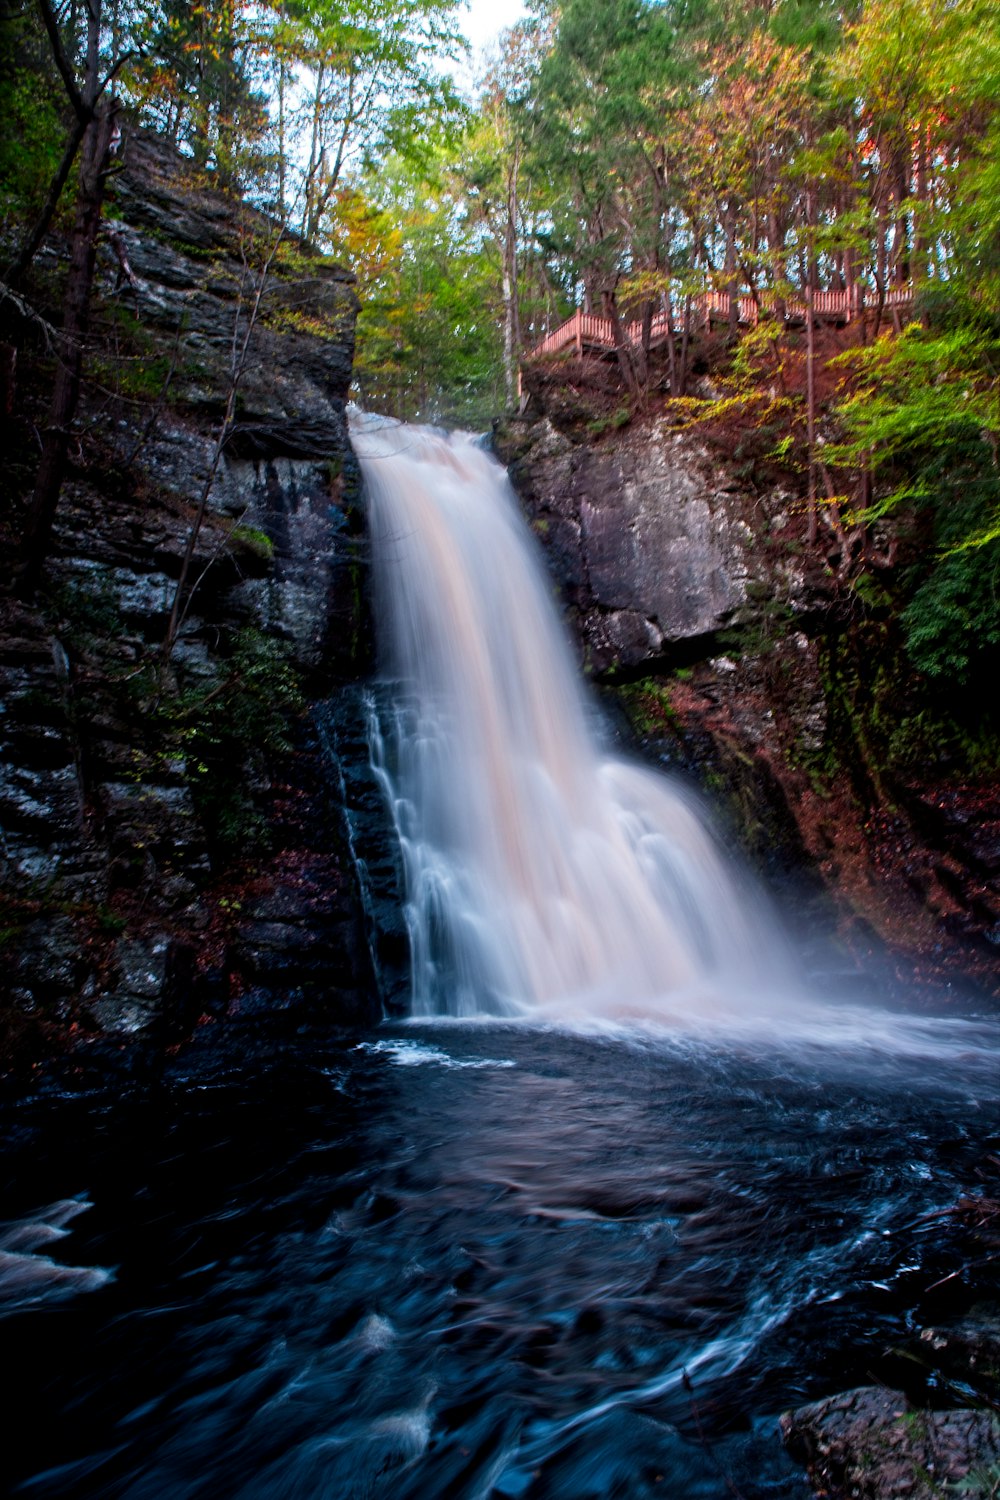 rocky mountain waterfalls near trees